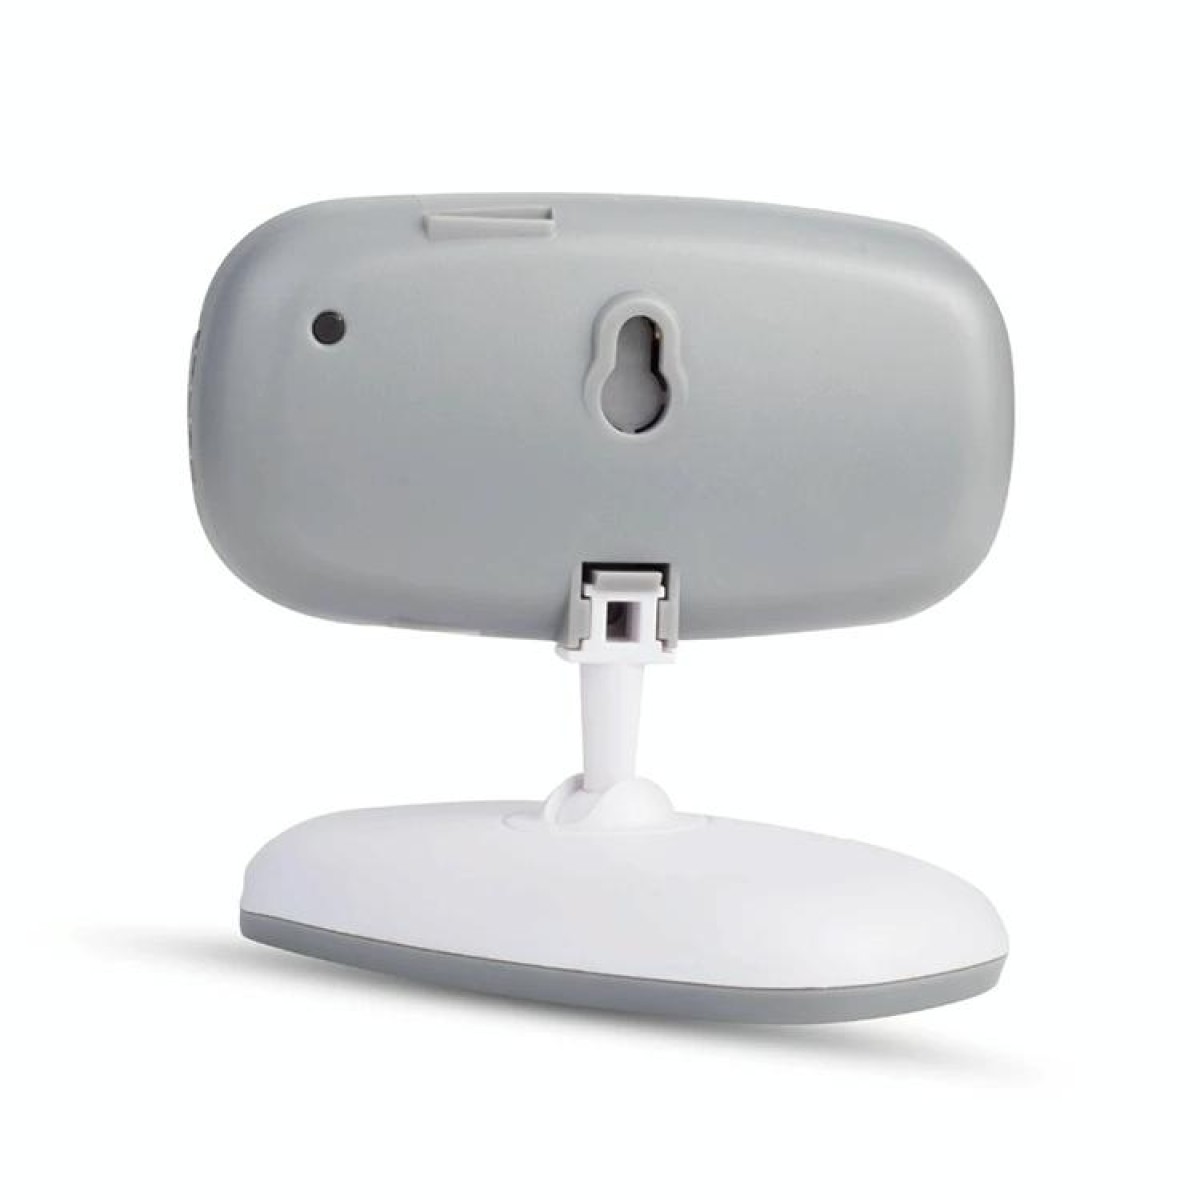 WLSES GC60 720P Wireless Surveillance Camera Baby Monitor, US Plug